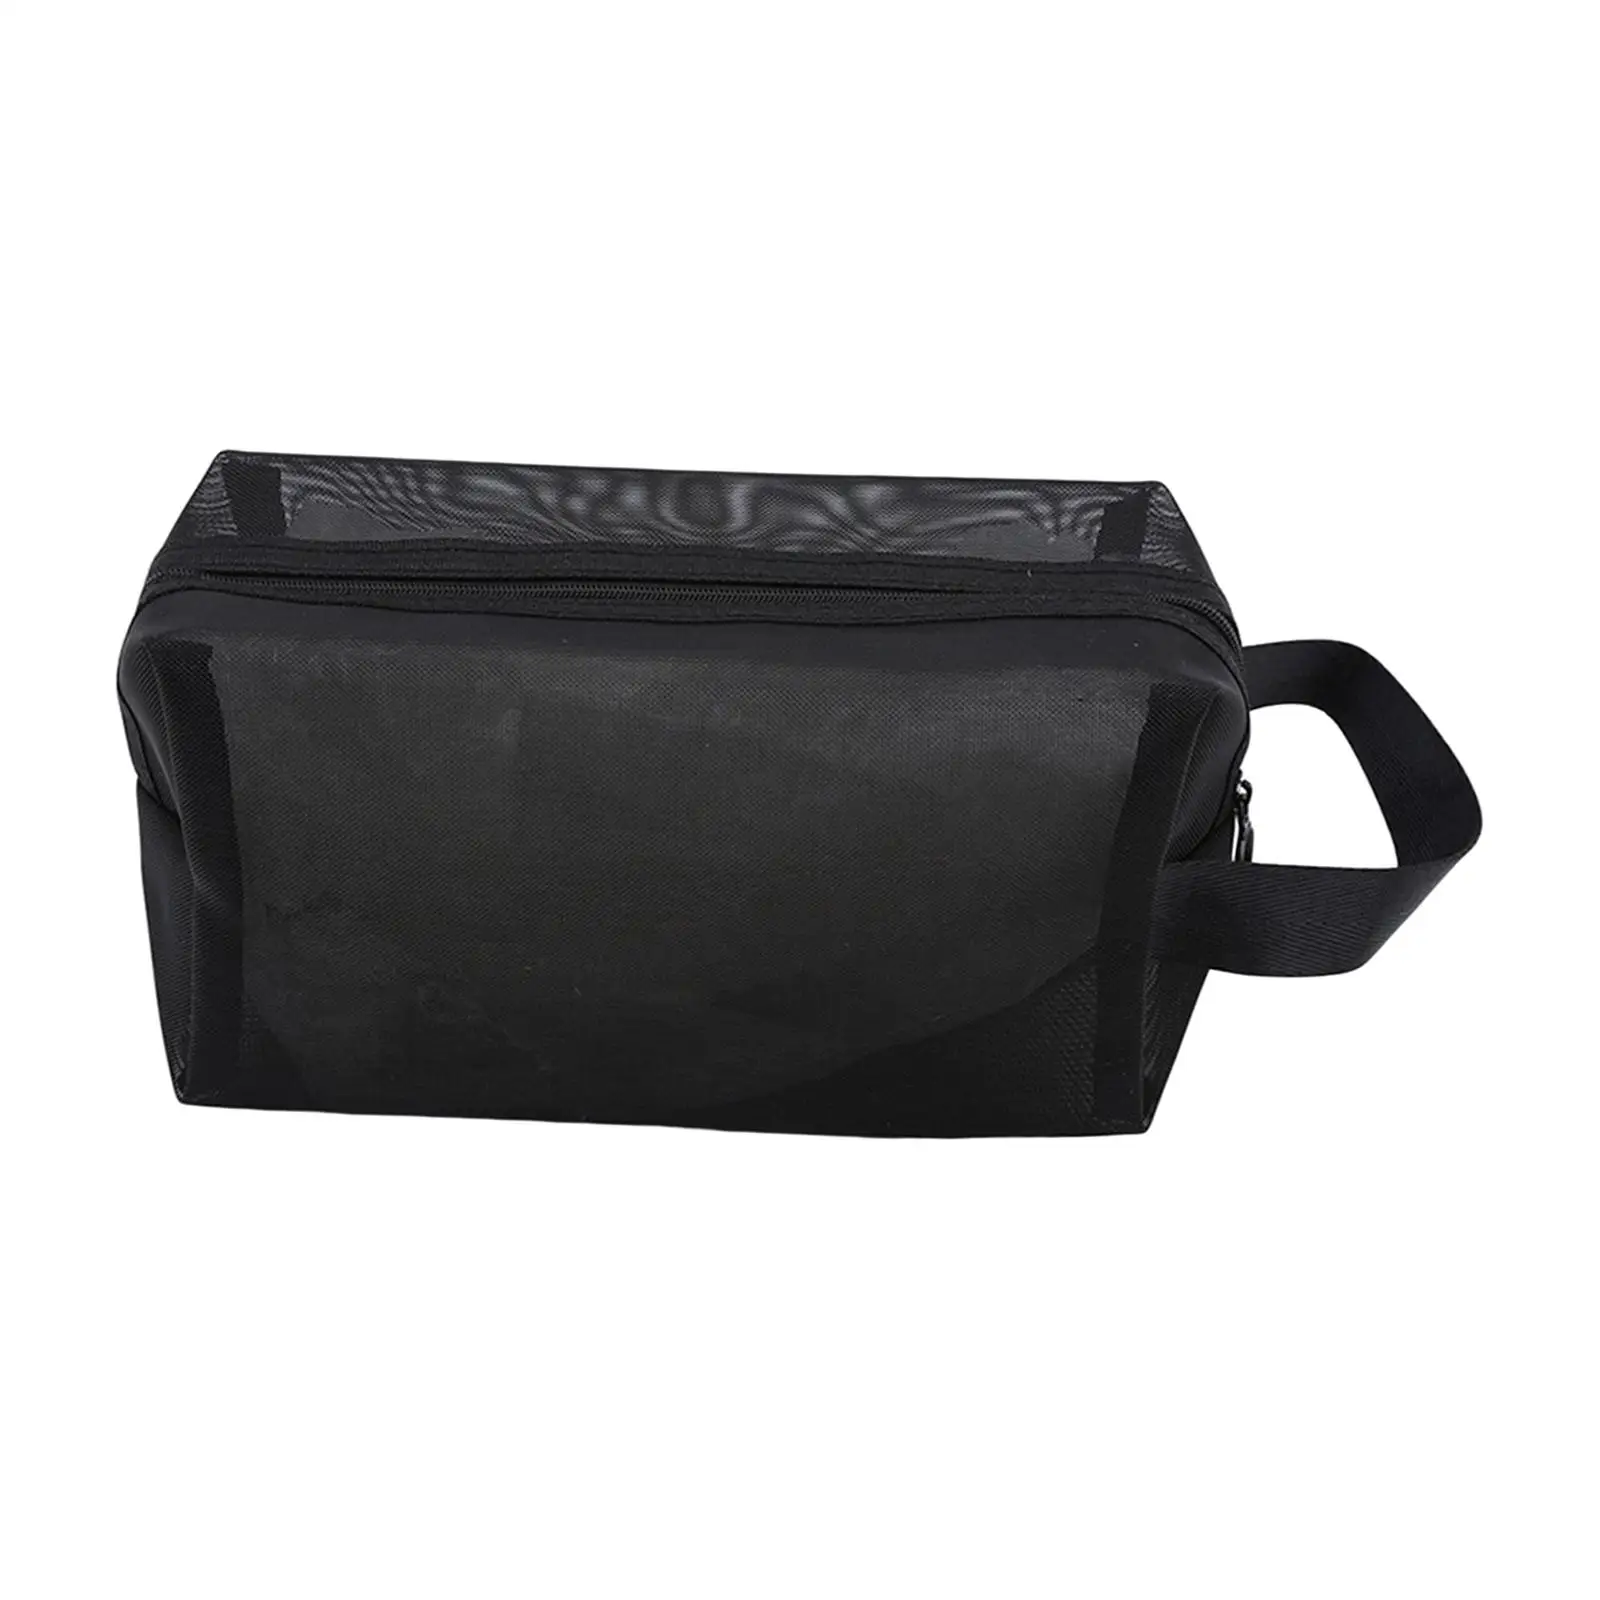 Mesh Cosmetic Bag Multifunction Portable Black for Accessories Bathroom